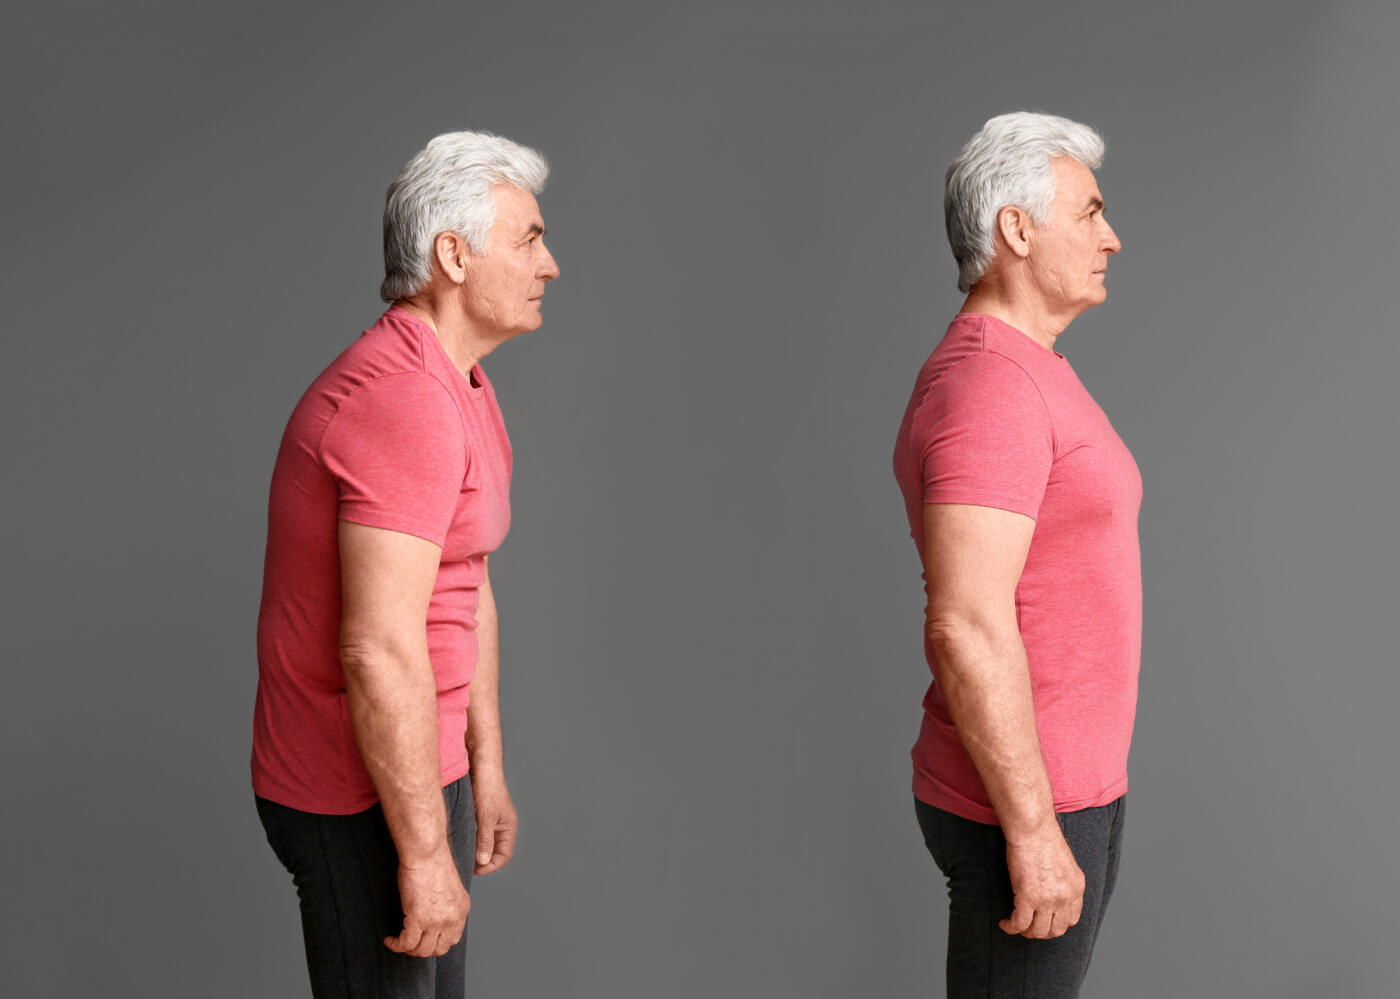 Posture Corrector - To Improve Your Posture